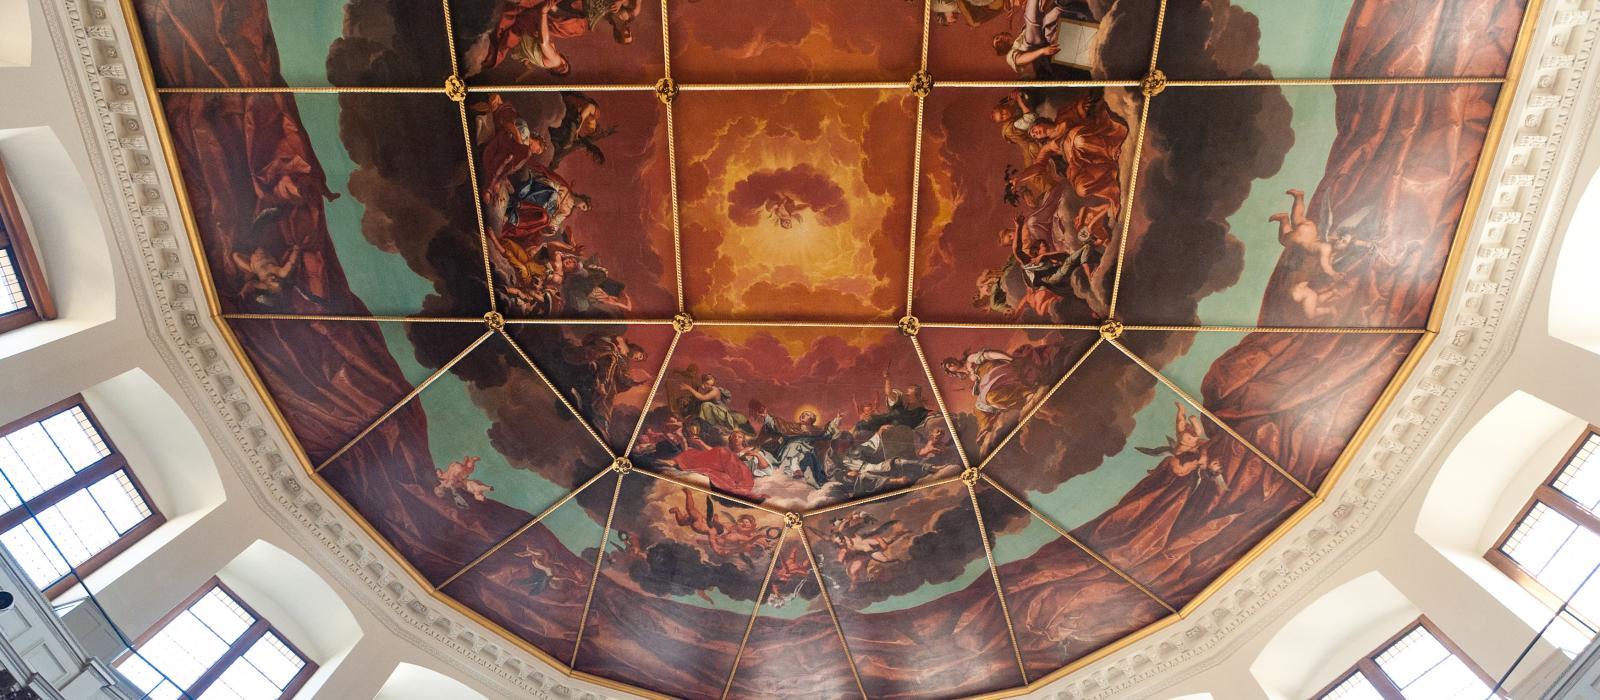 Ceiling fresco, Sheldonian Theatre